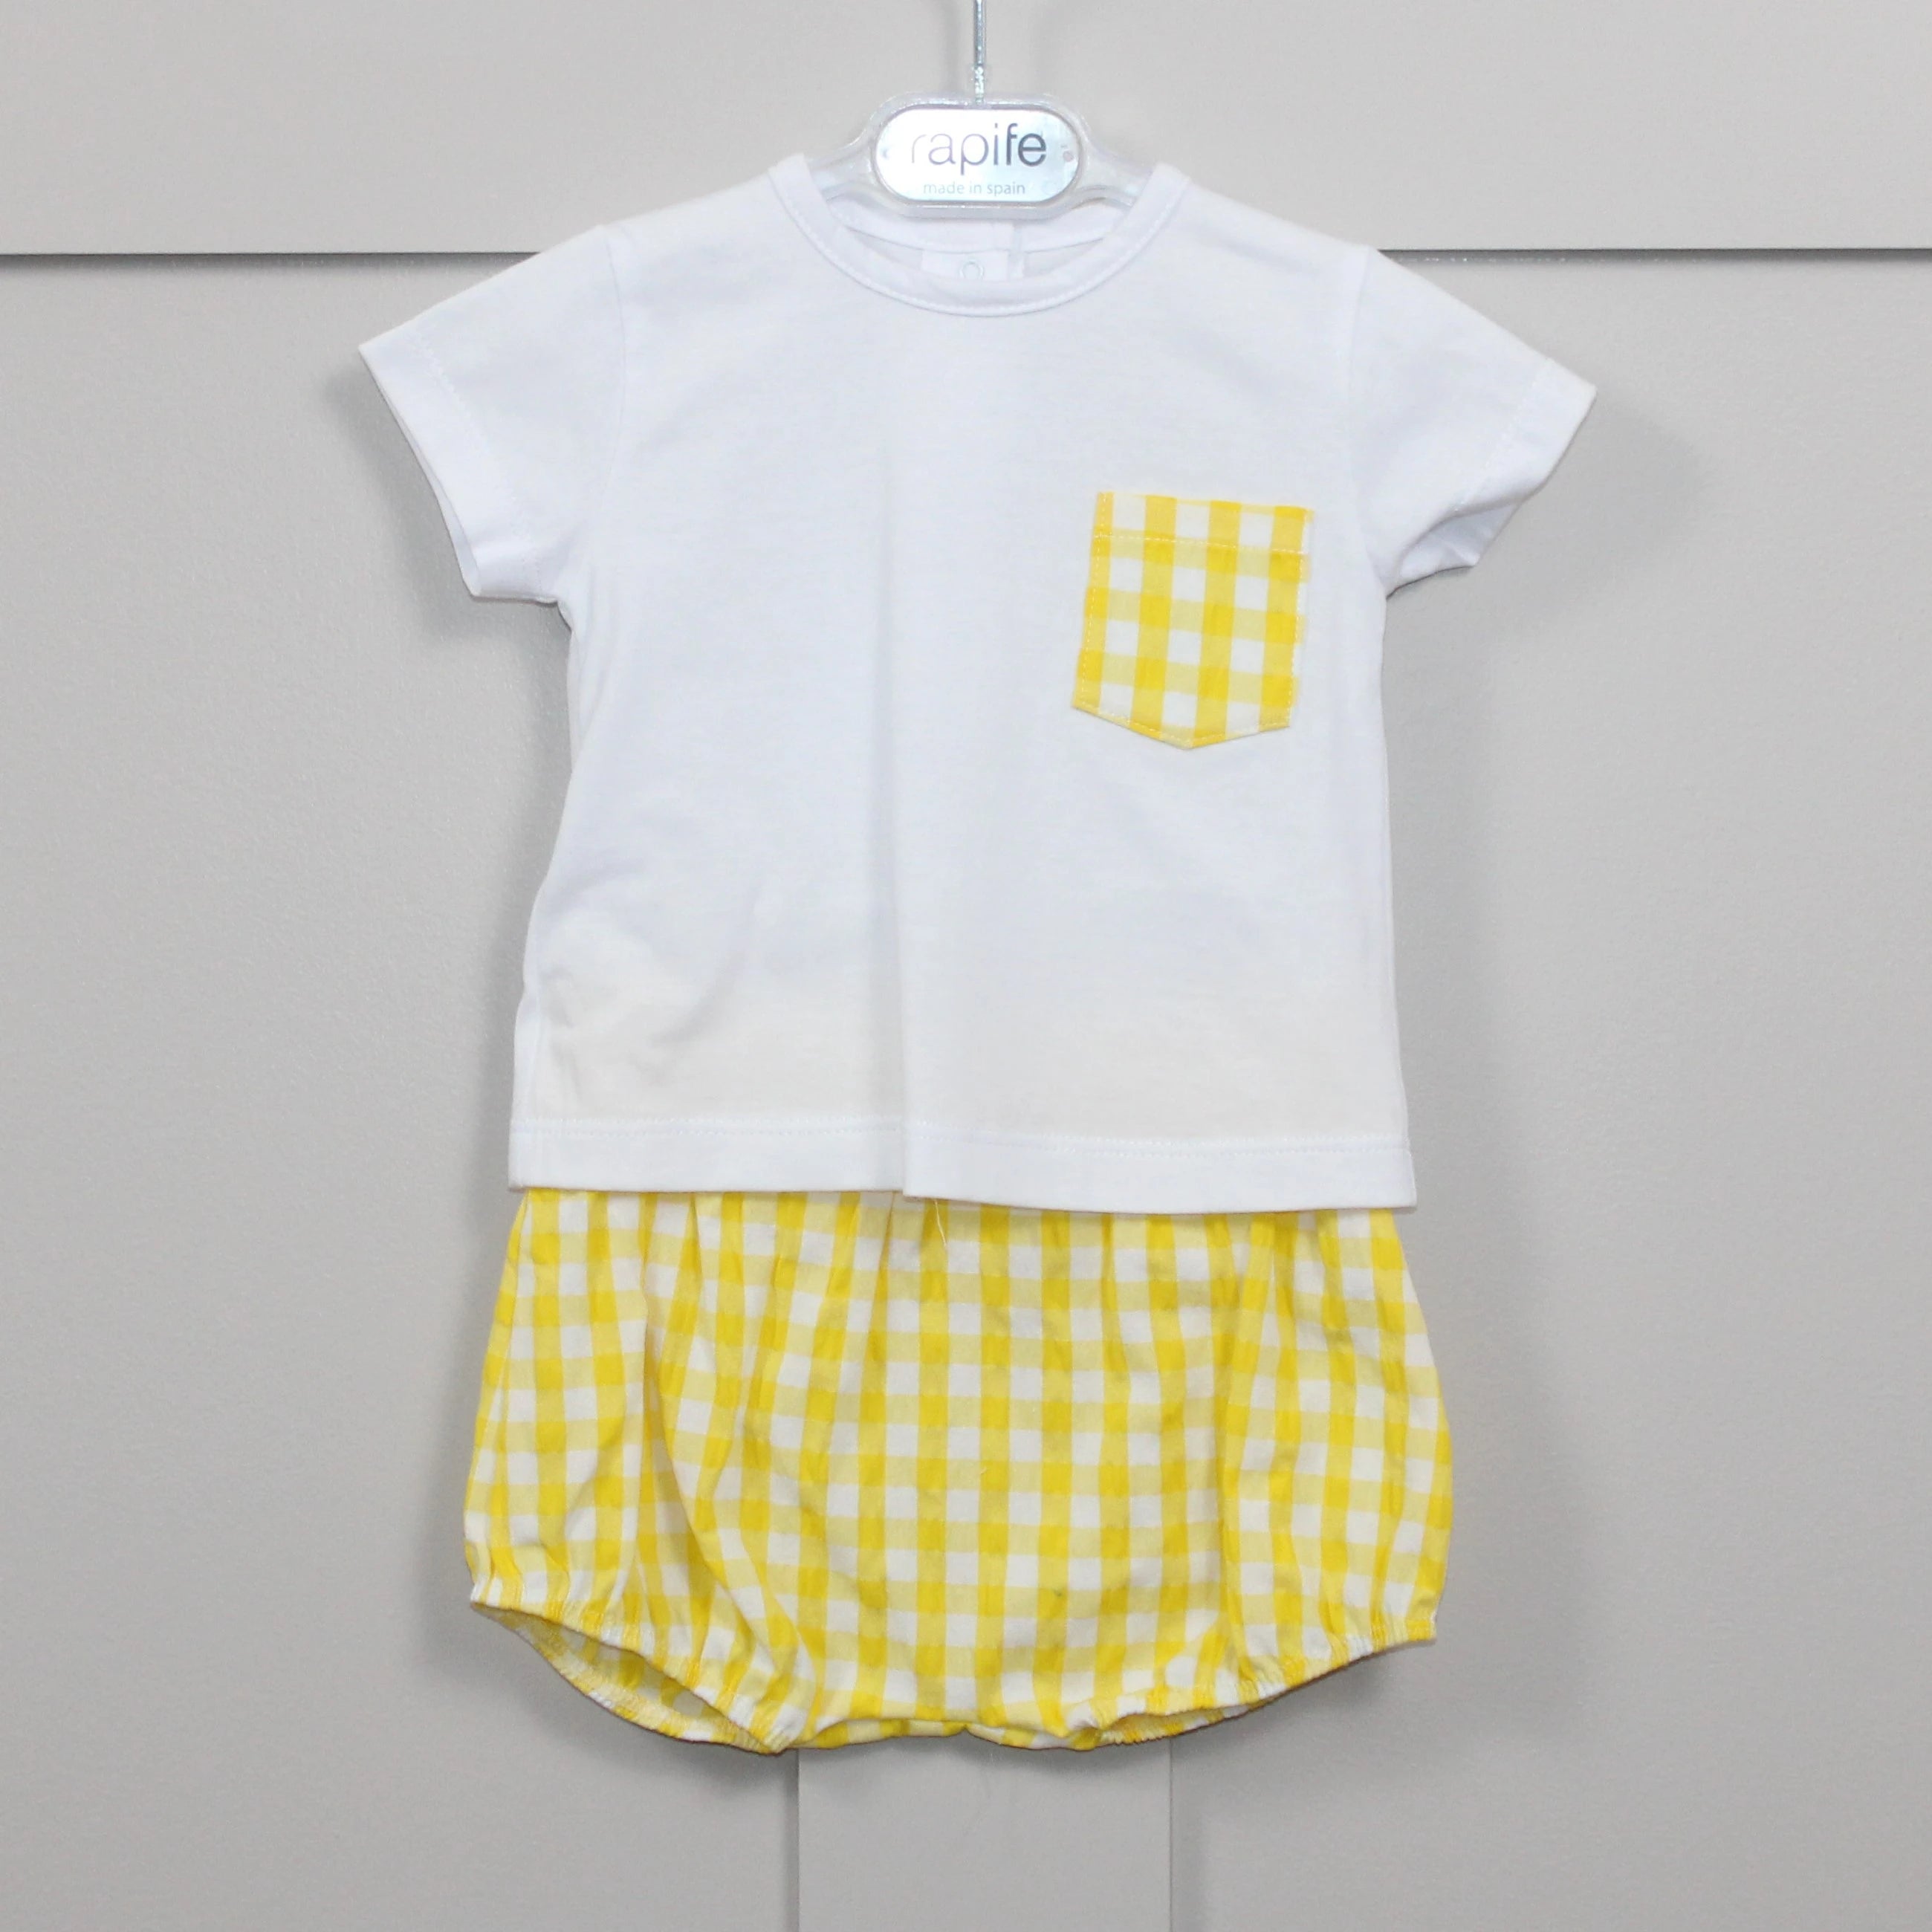 Rapife lemon boys t-shirt and shorts set 